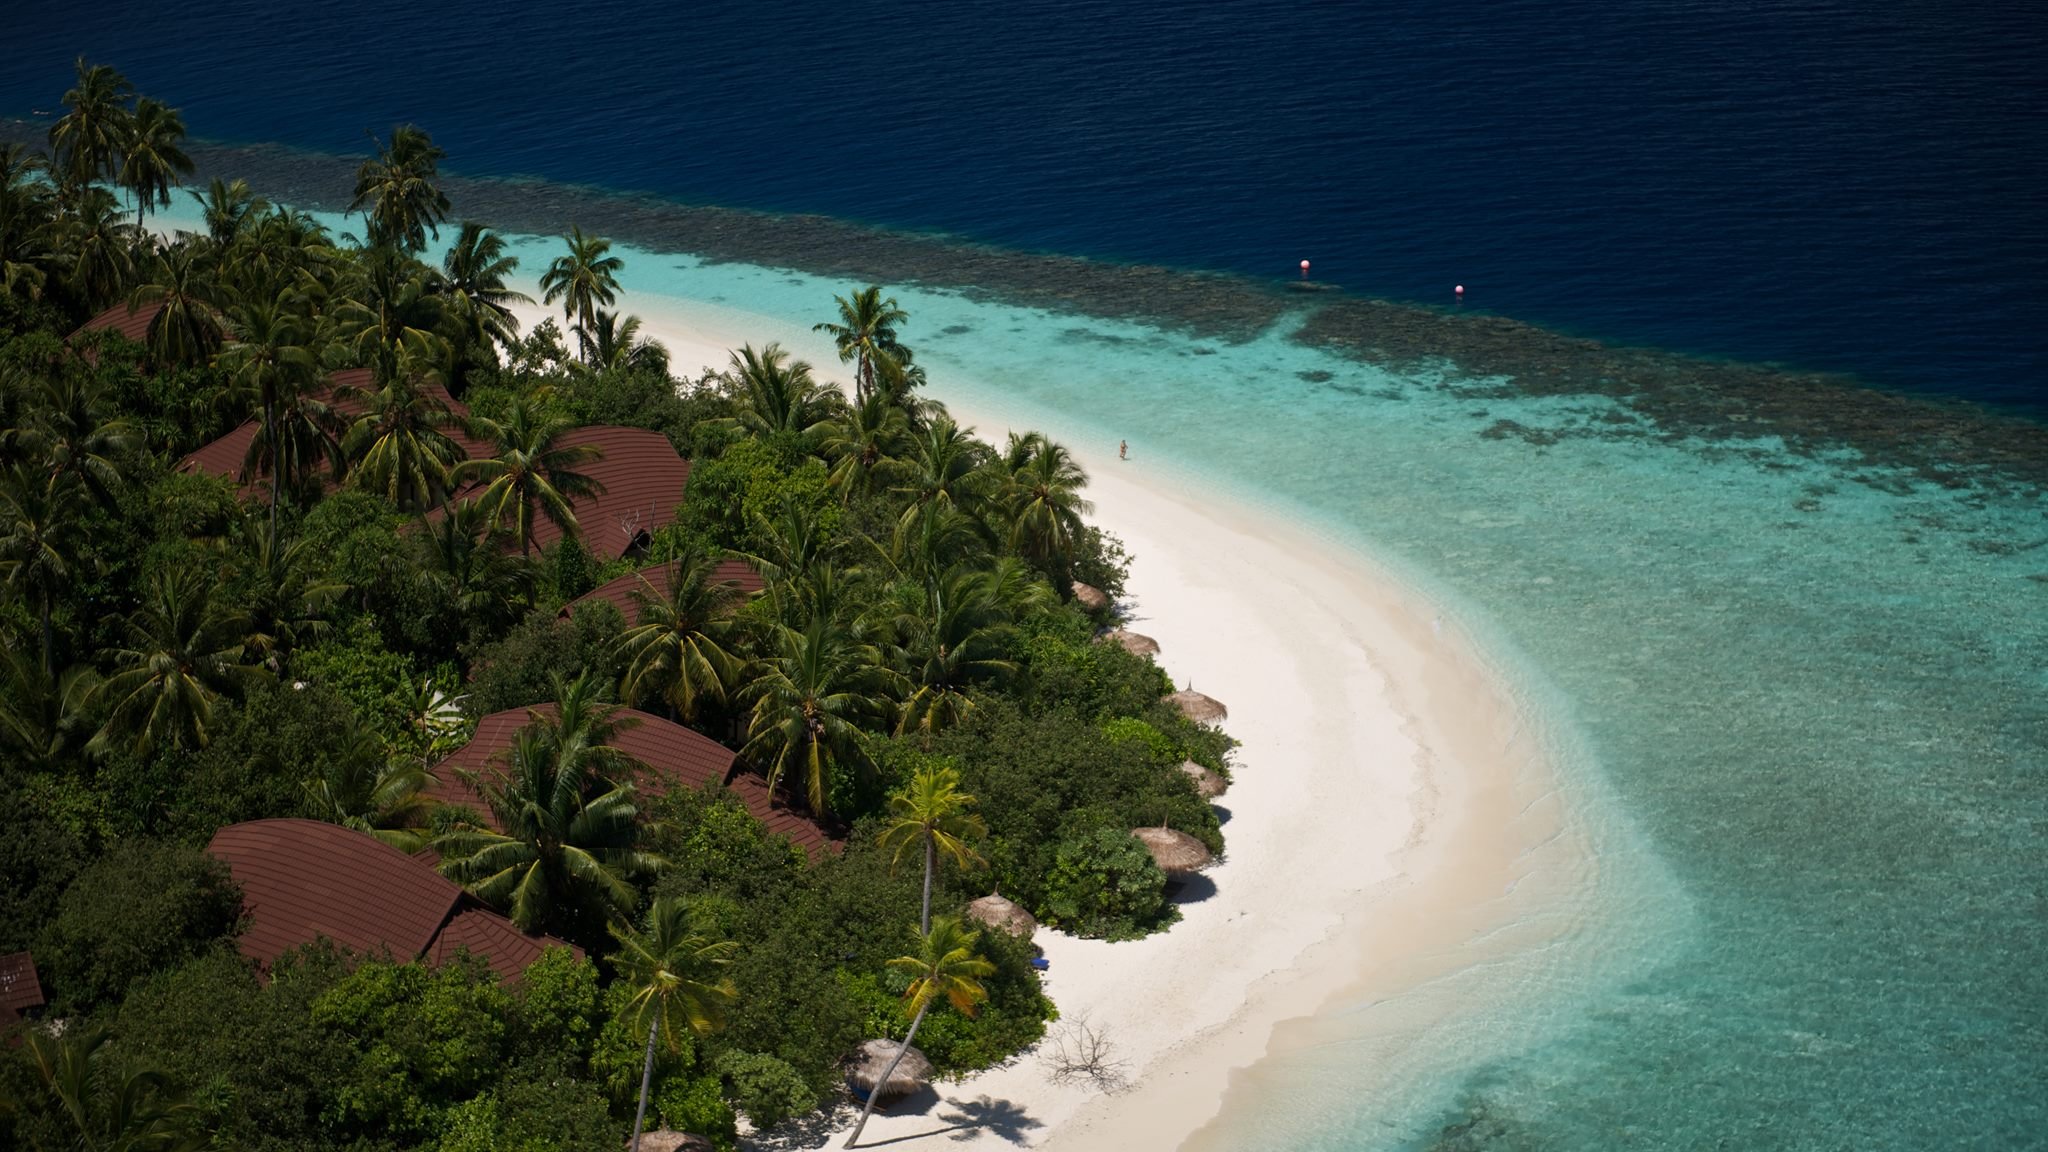 robinson-club-maldive-focus-estremità-wadi-destination.jpg